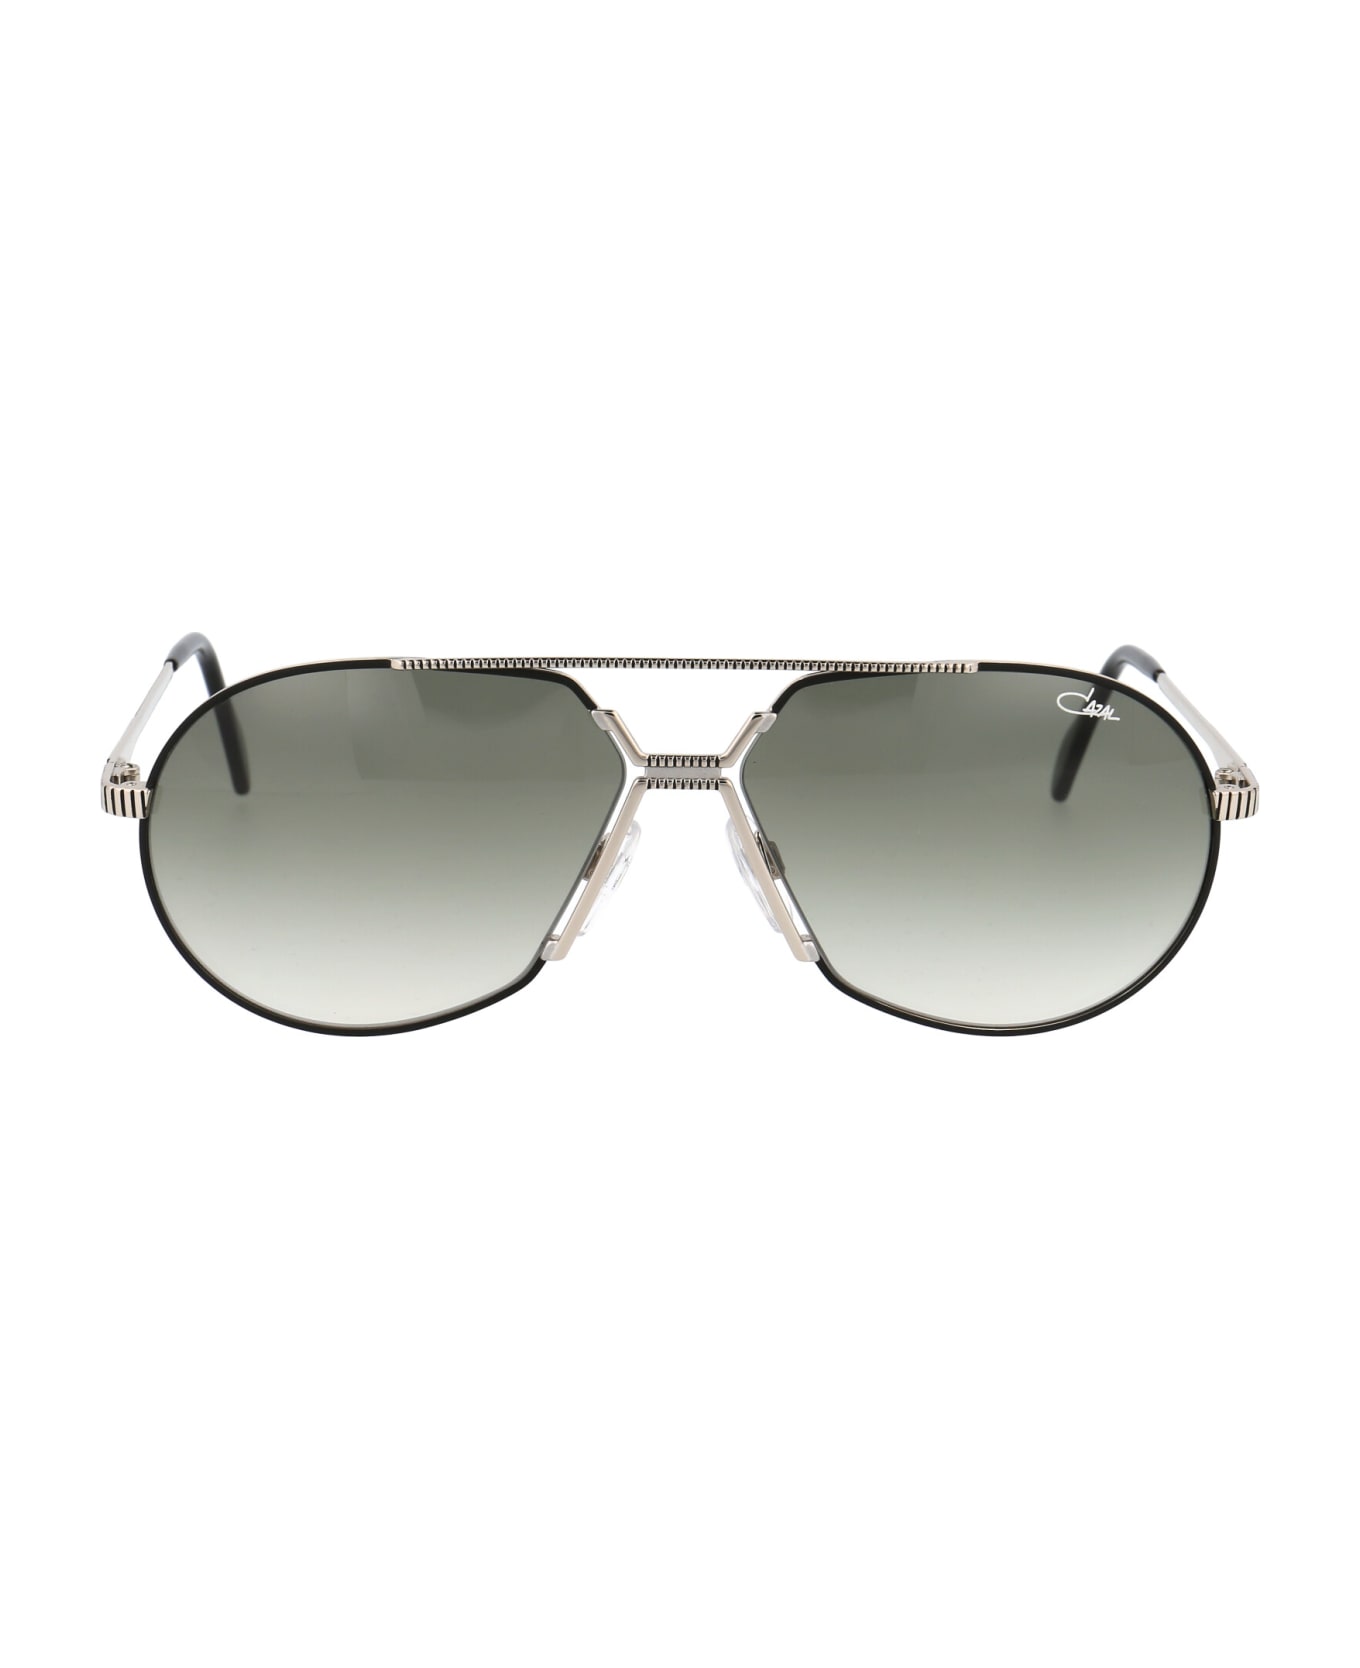 Cazal Mod. 968 Sunglasses - 002 BLACK SILVER